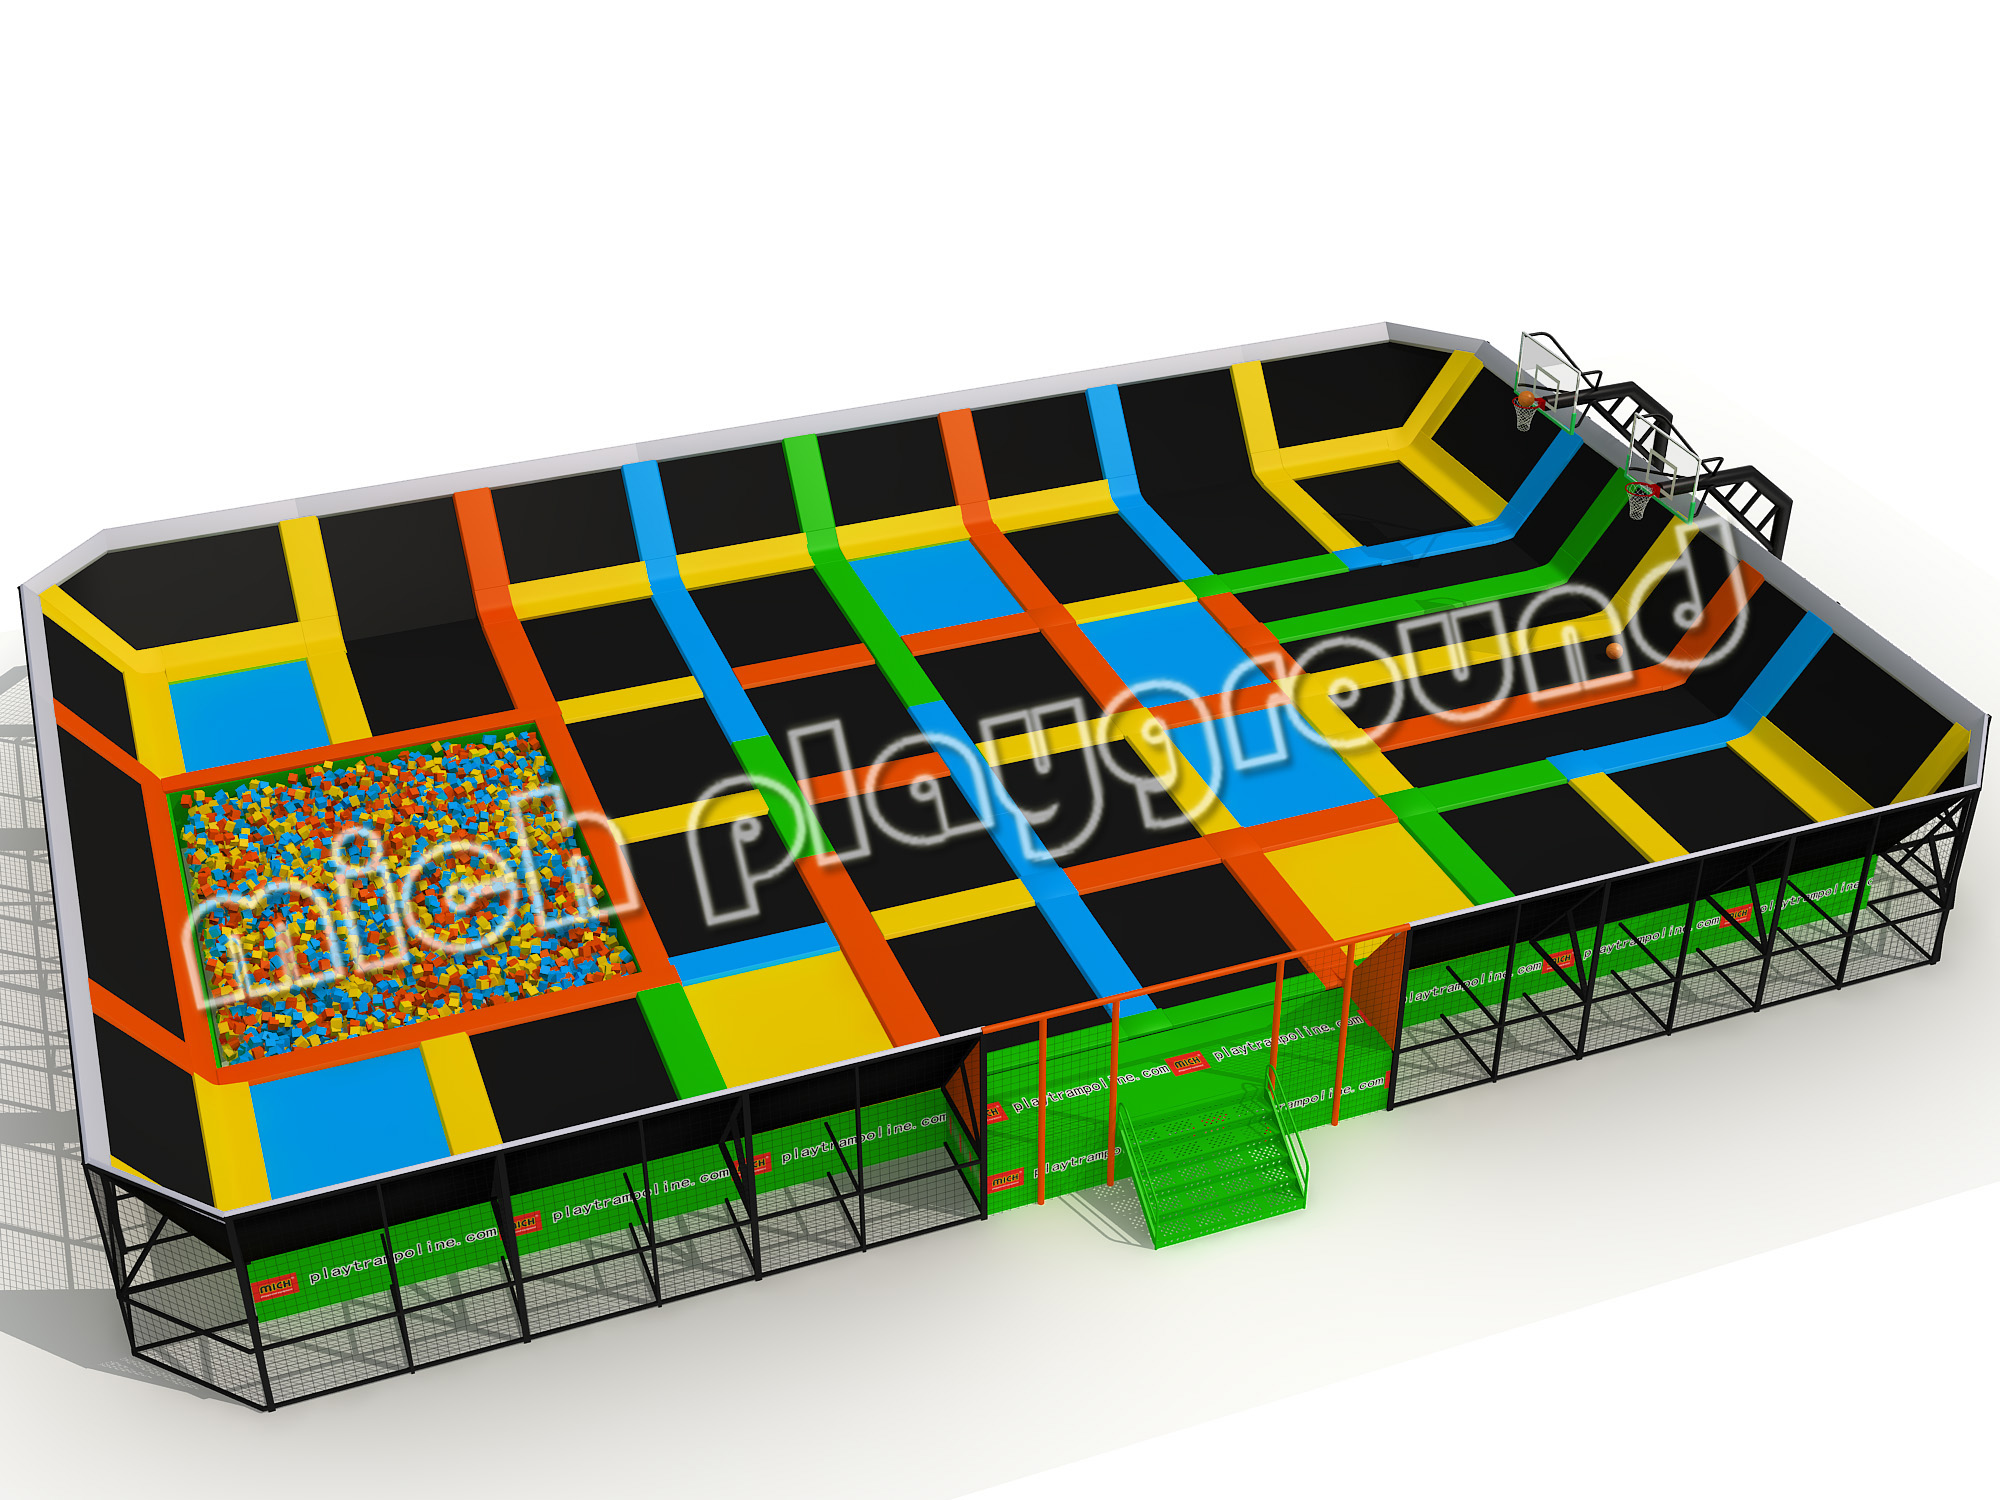 MICH Indoor Trampoline Park Design for Amusement 5110A